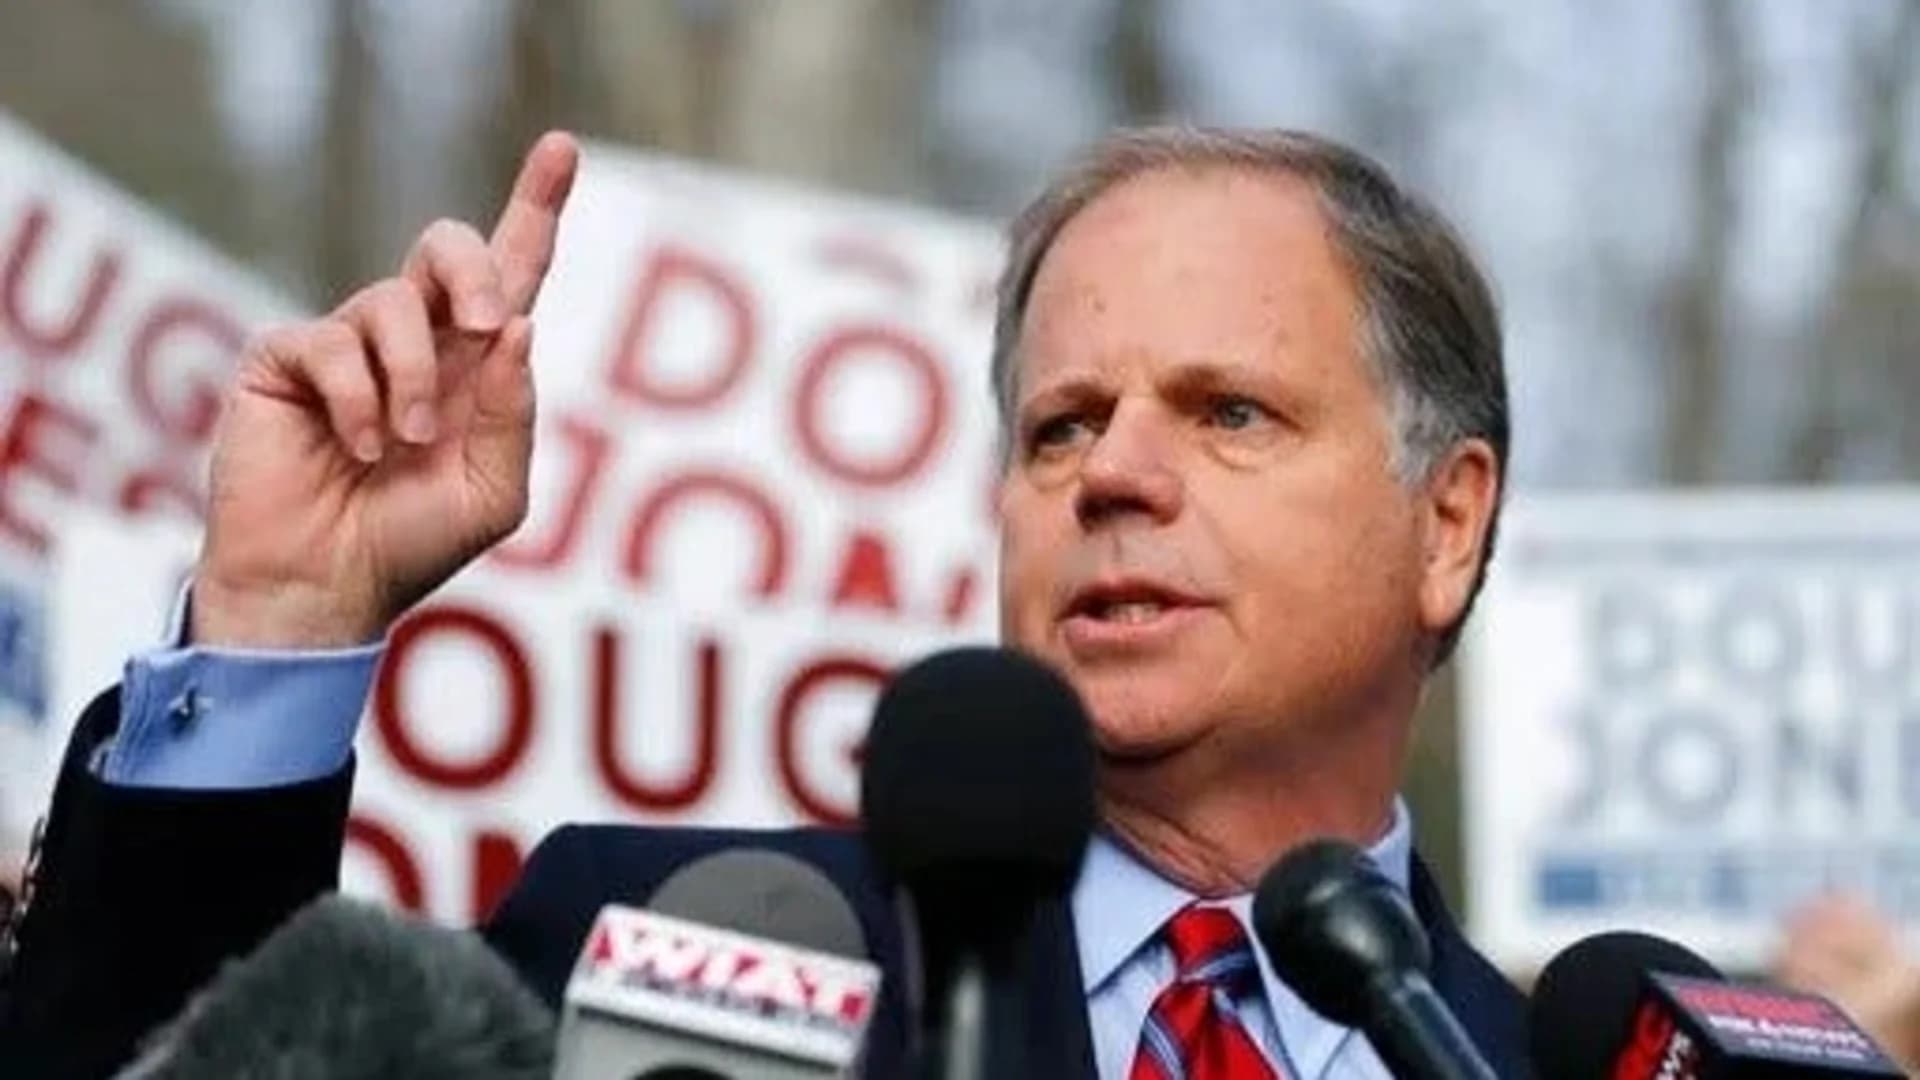 Democrat Doug Jones wins election to US Senate from Alabama